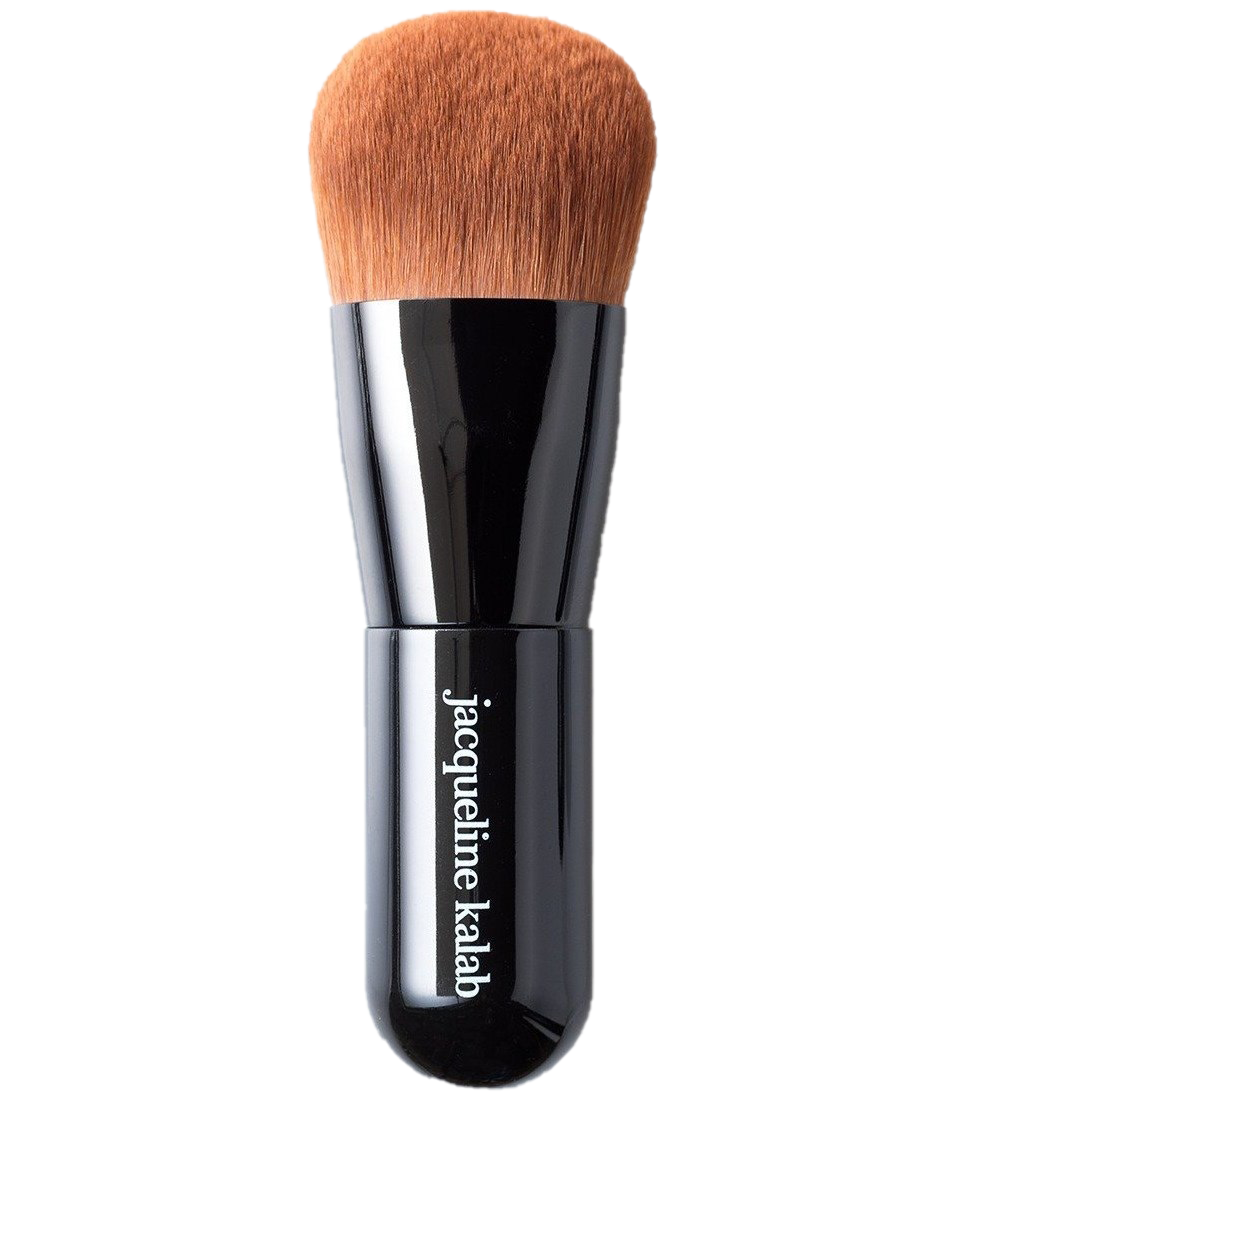 Makeup Brush PNG Image File